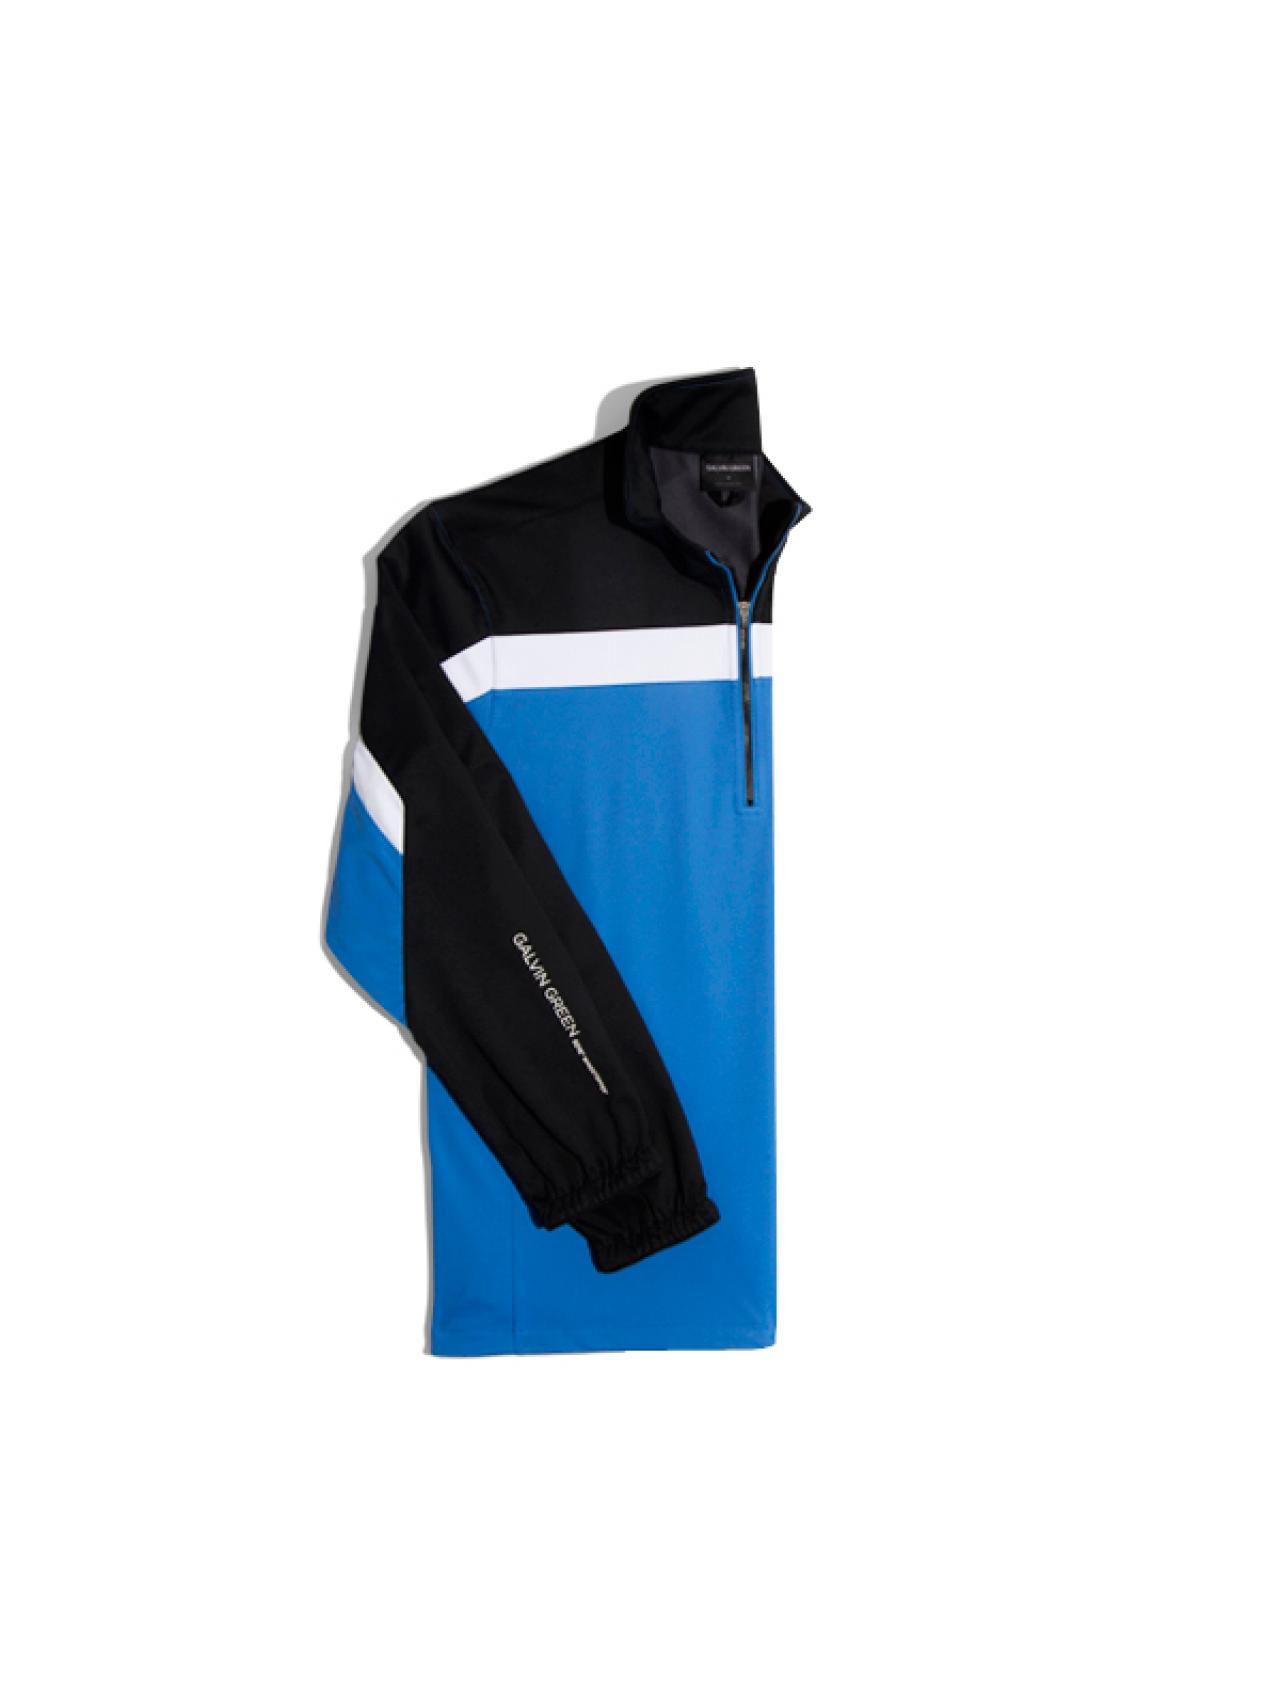 short sleeve windproof golf jacket